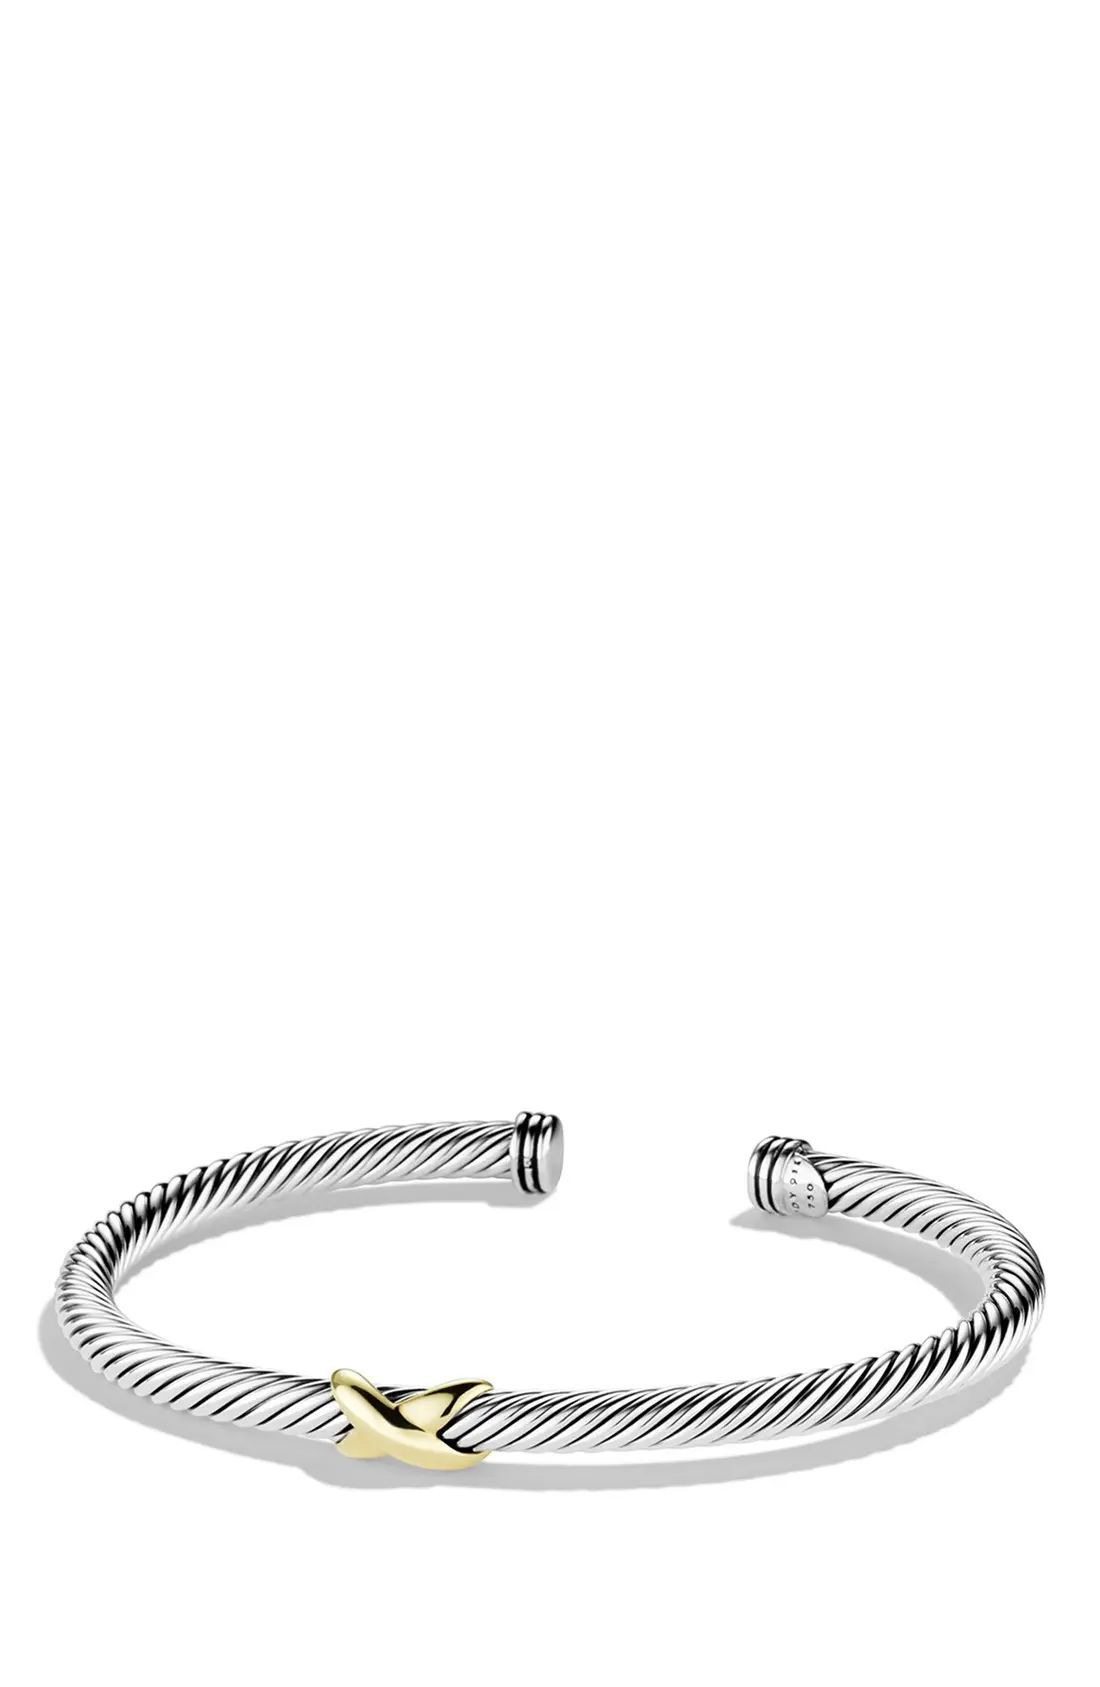 David Yurman 'X' Bracelet with Gold | Nordstrom